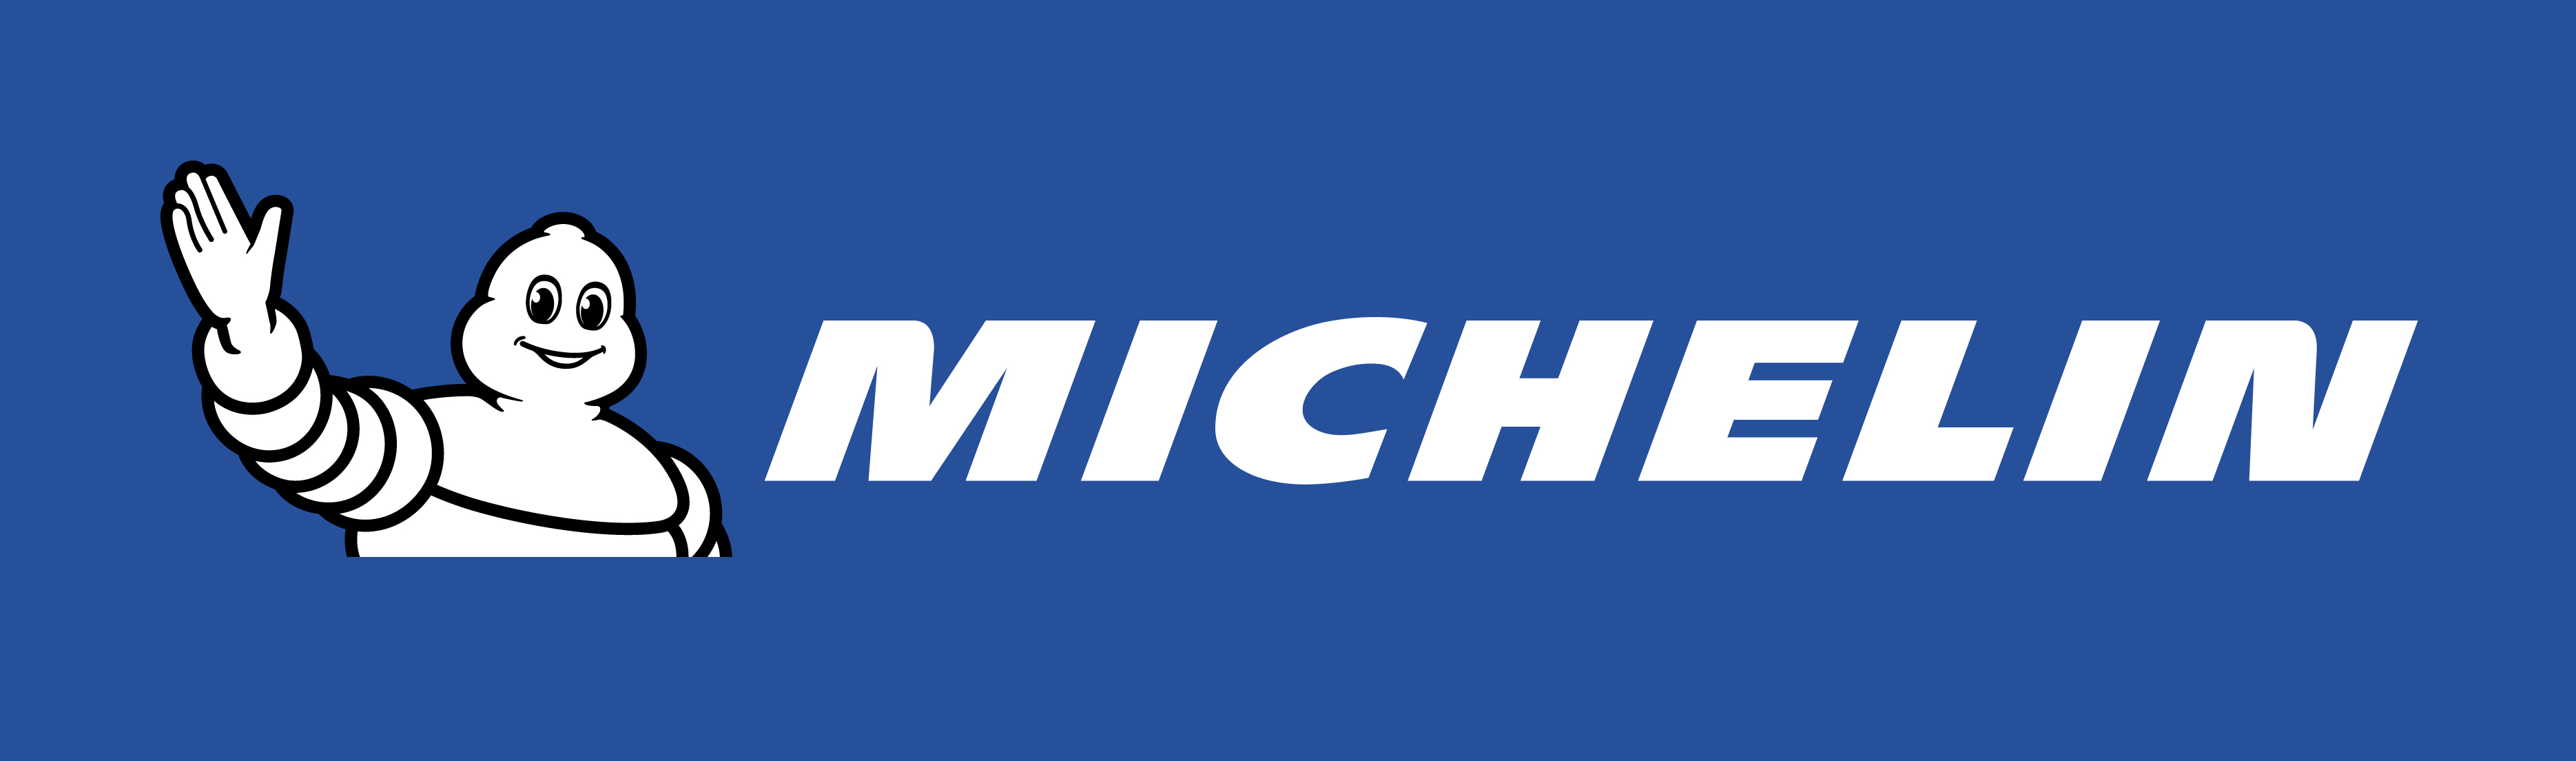 Michelin logo. Mishlene шины лого. Мишлен. Michelin лого. Машилен лого.